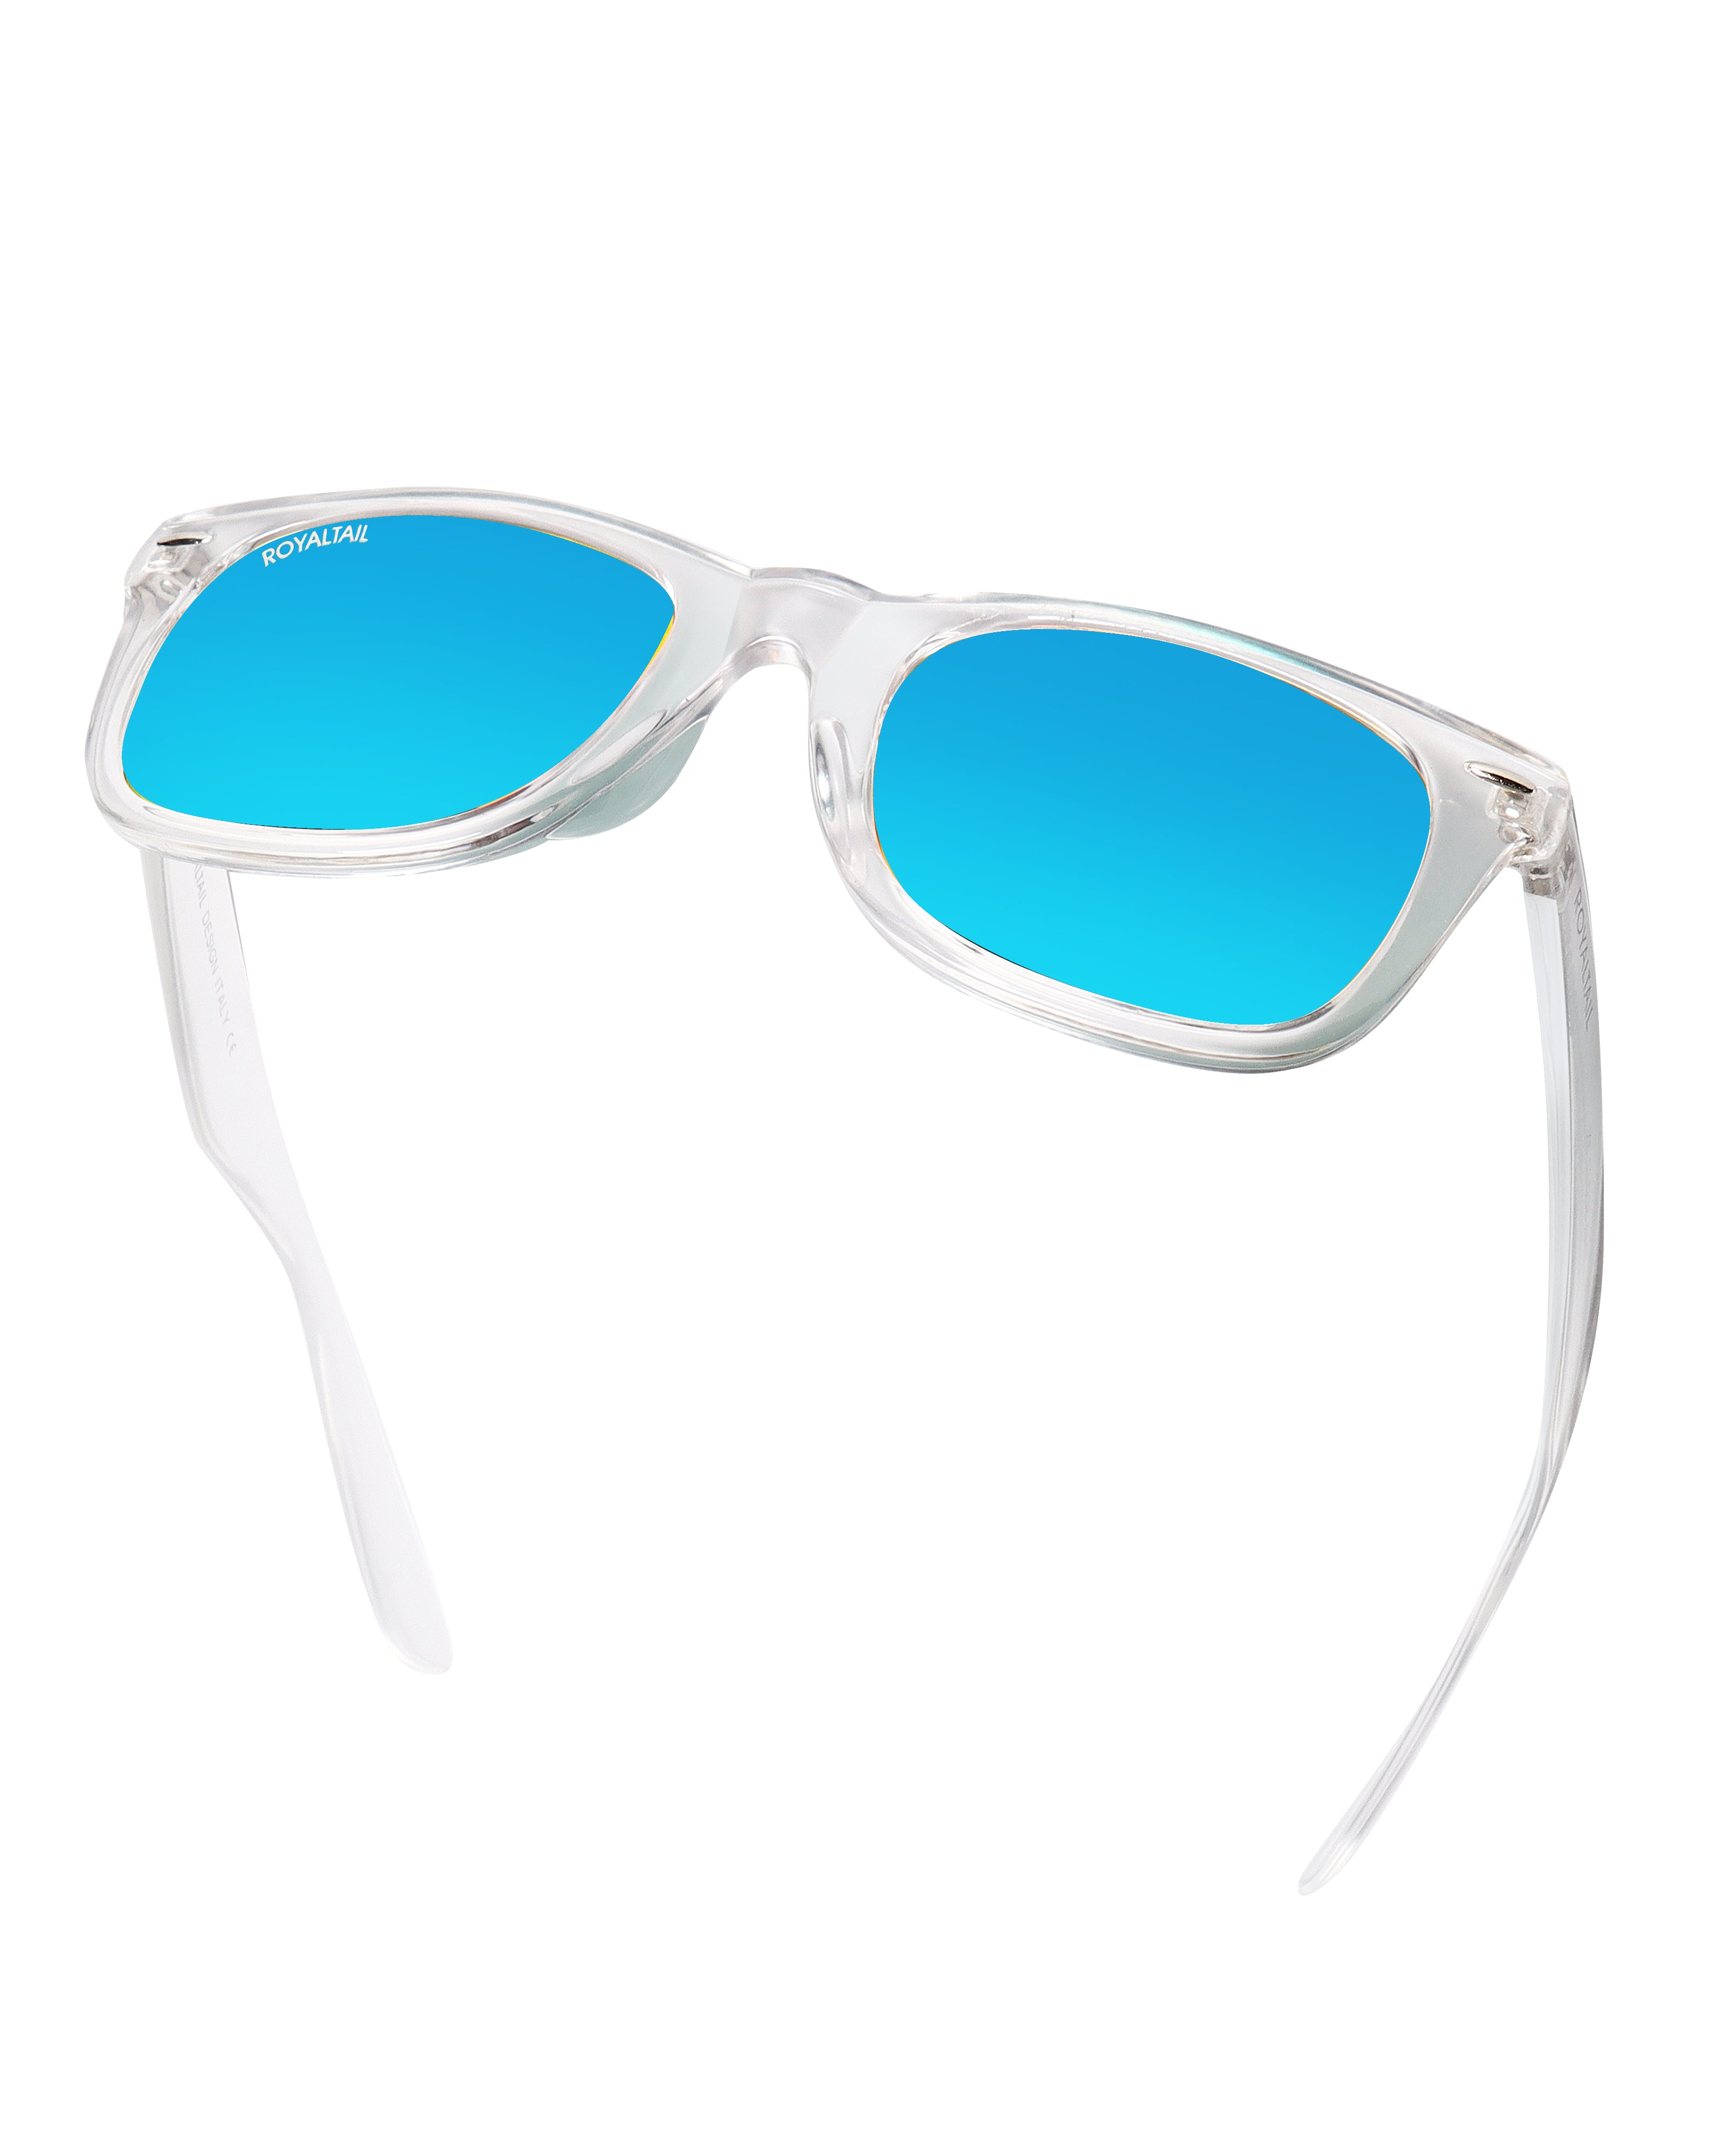 Maui Jim Kawika Classic Sunglasses - Blue Lenses With Clear Frame : Target